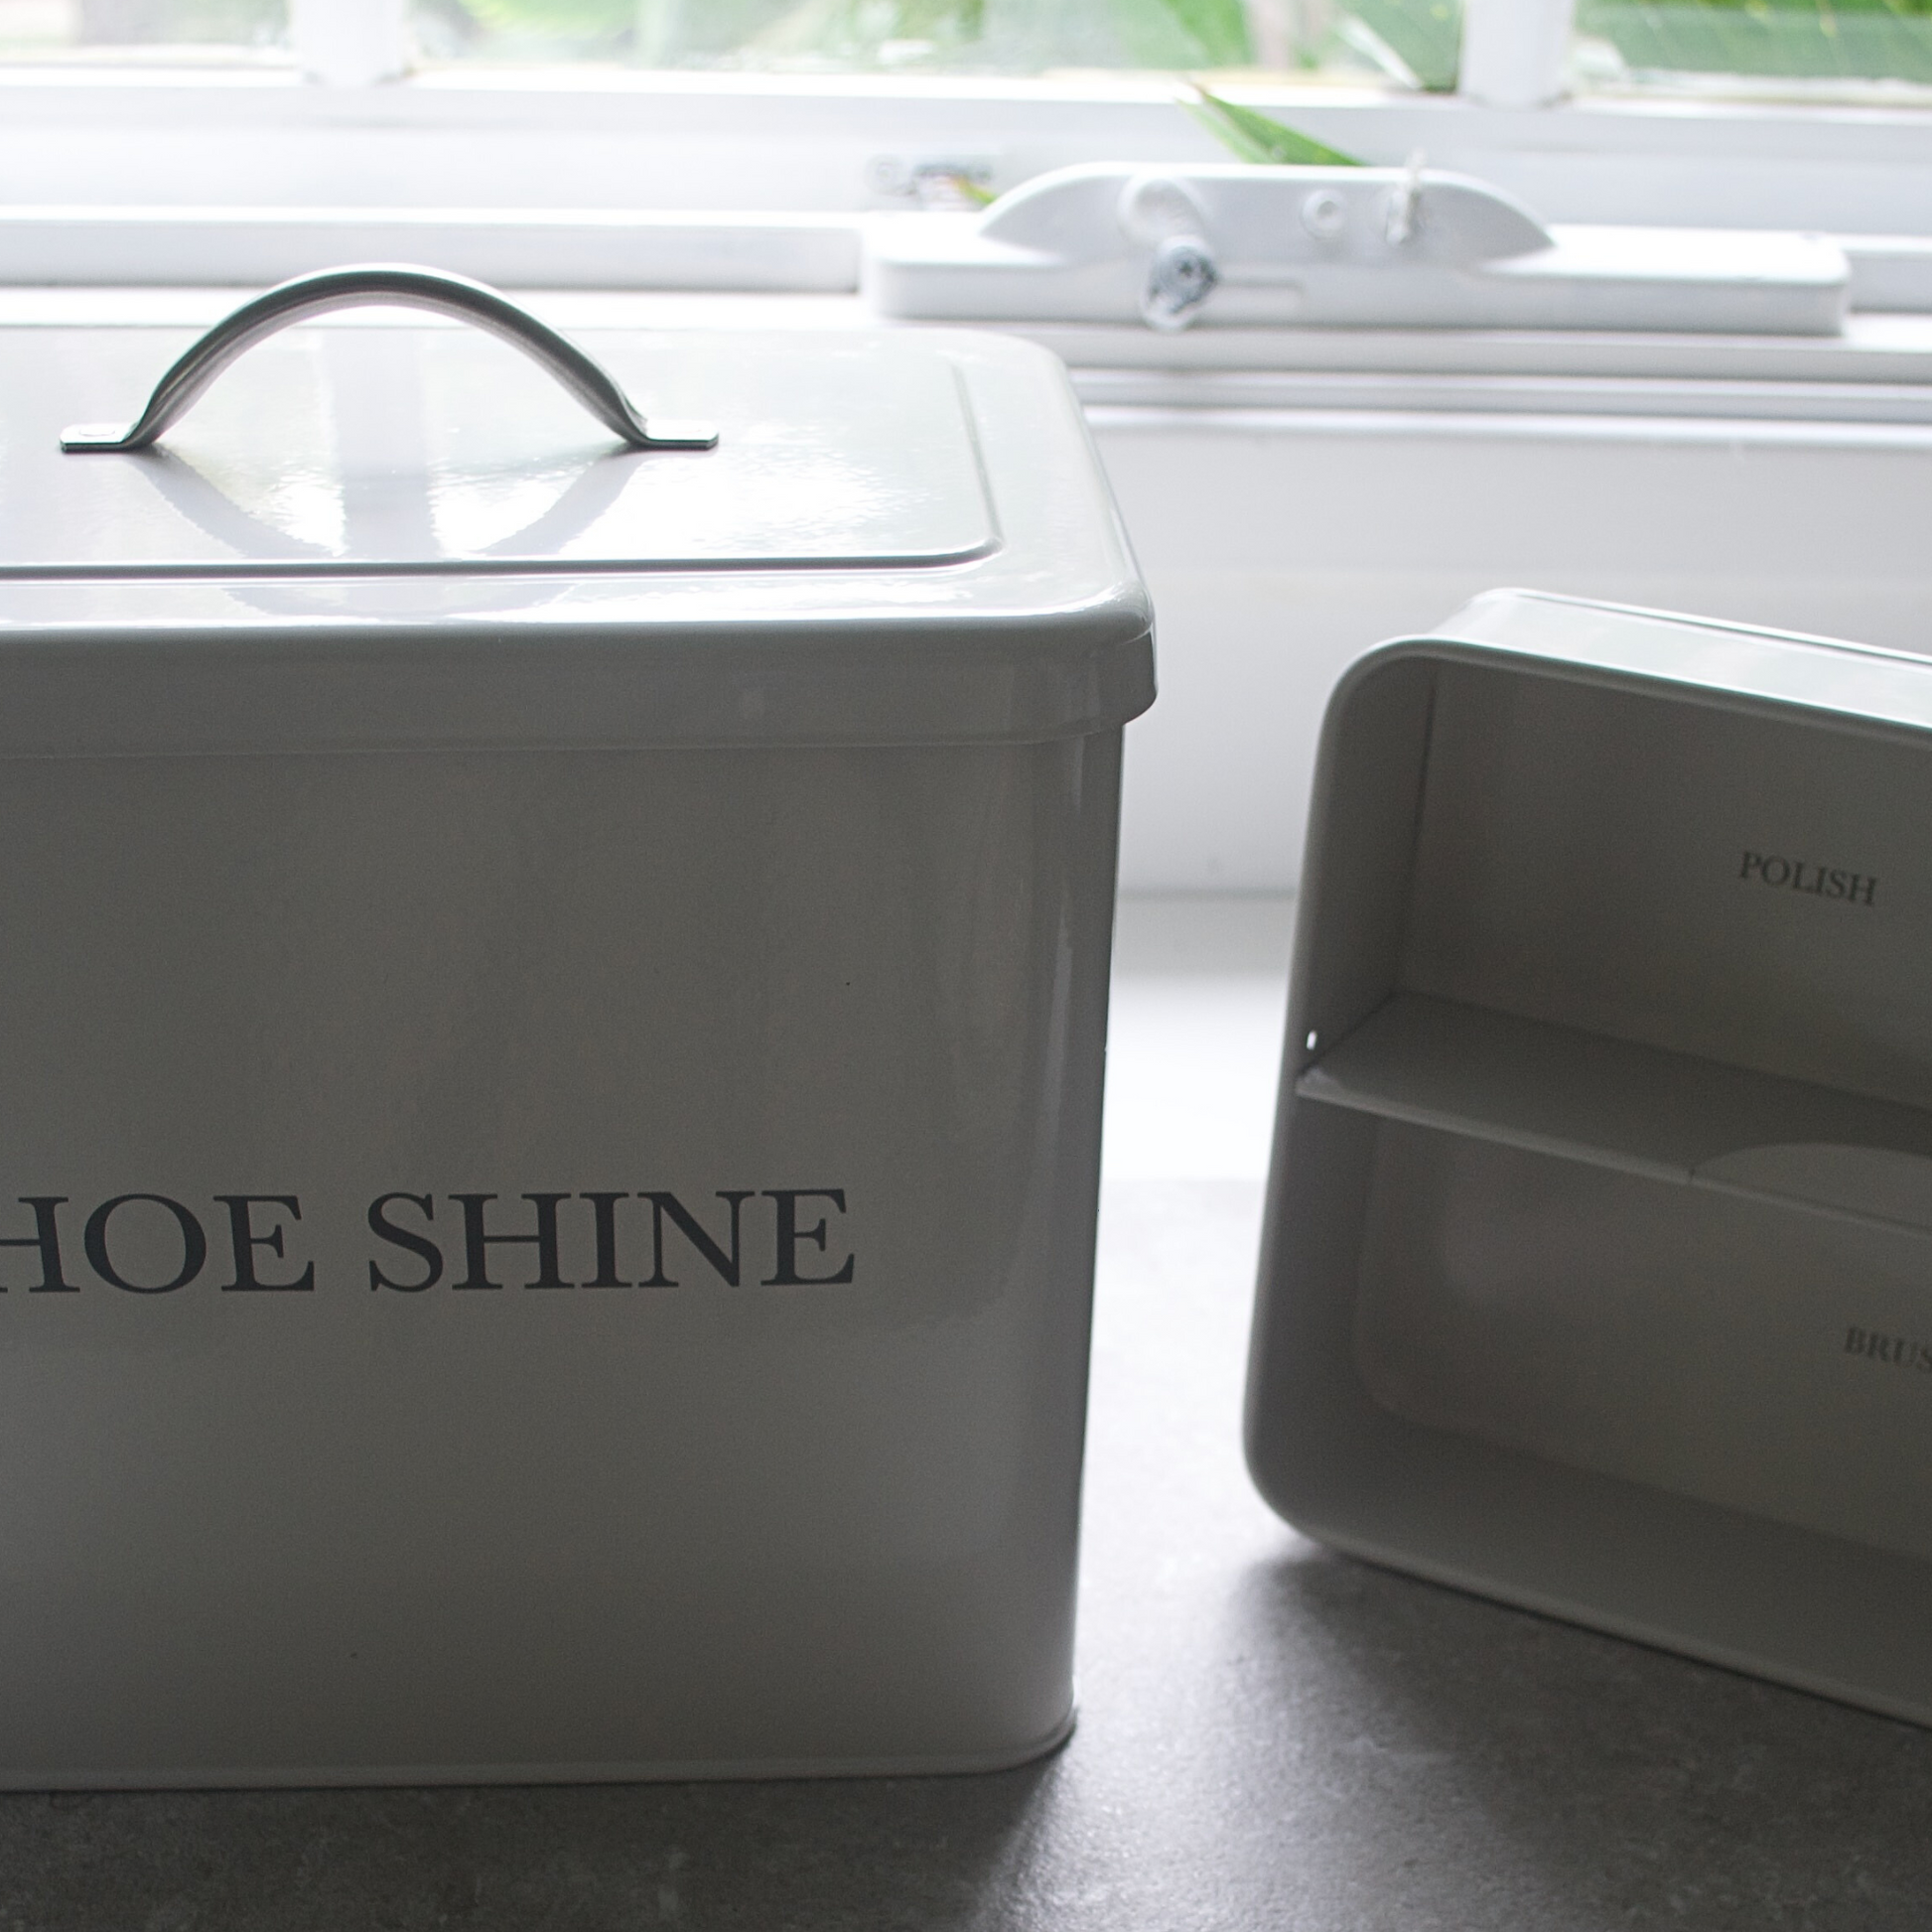 Shoe shine Box - Heaven in Earth